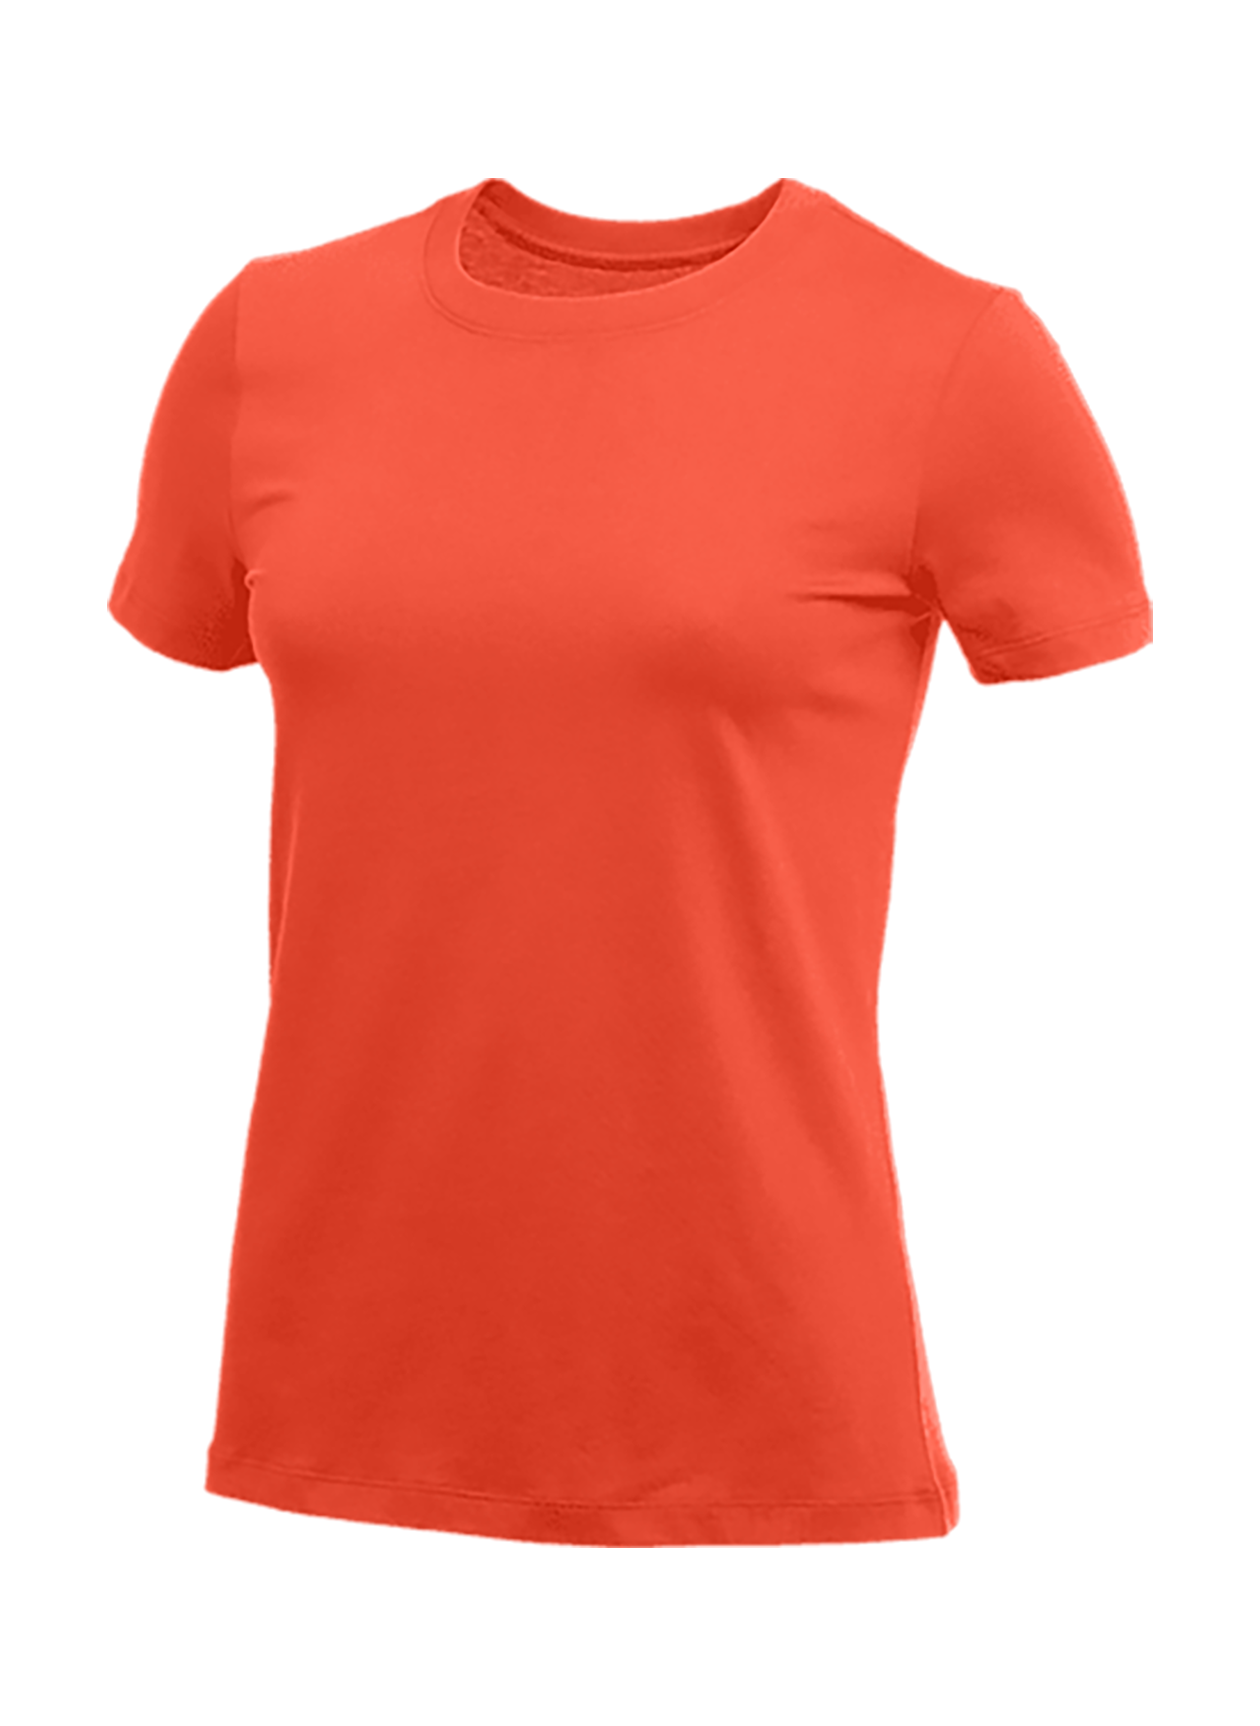 Nike Women's Team Orange T-Shirt